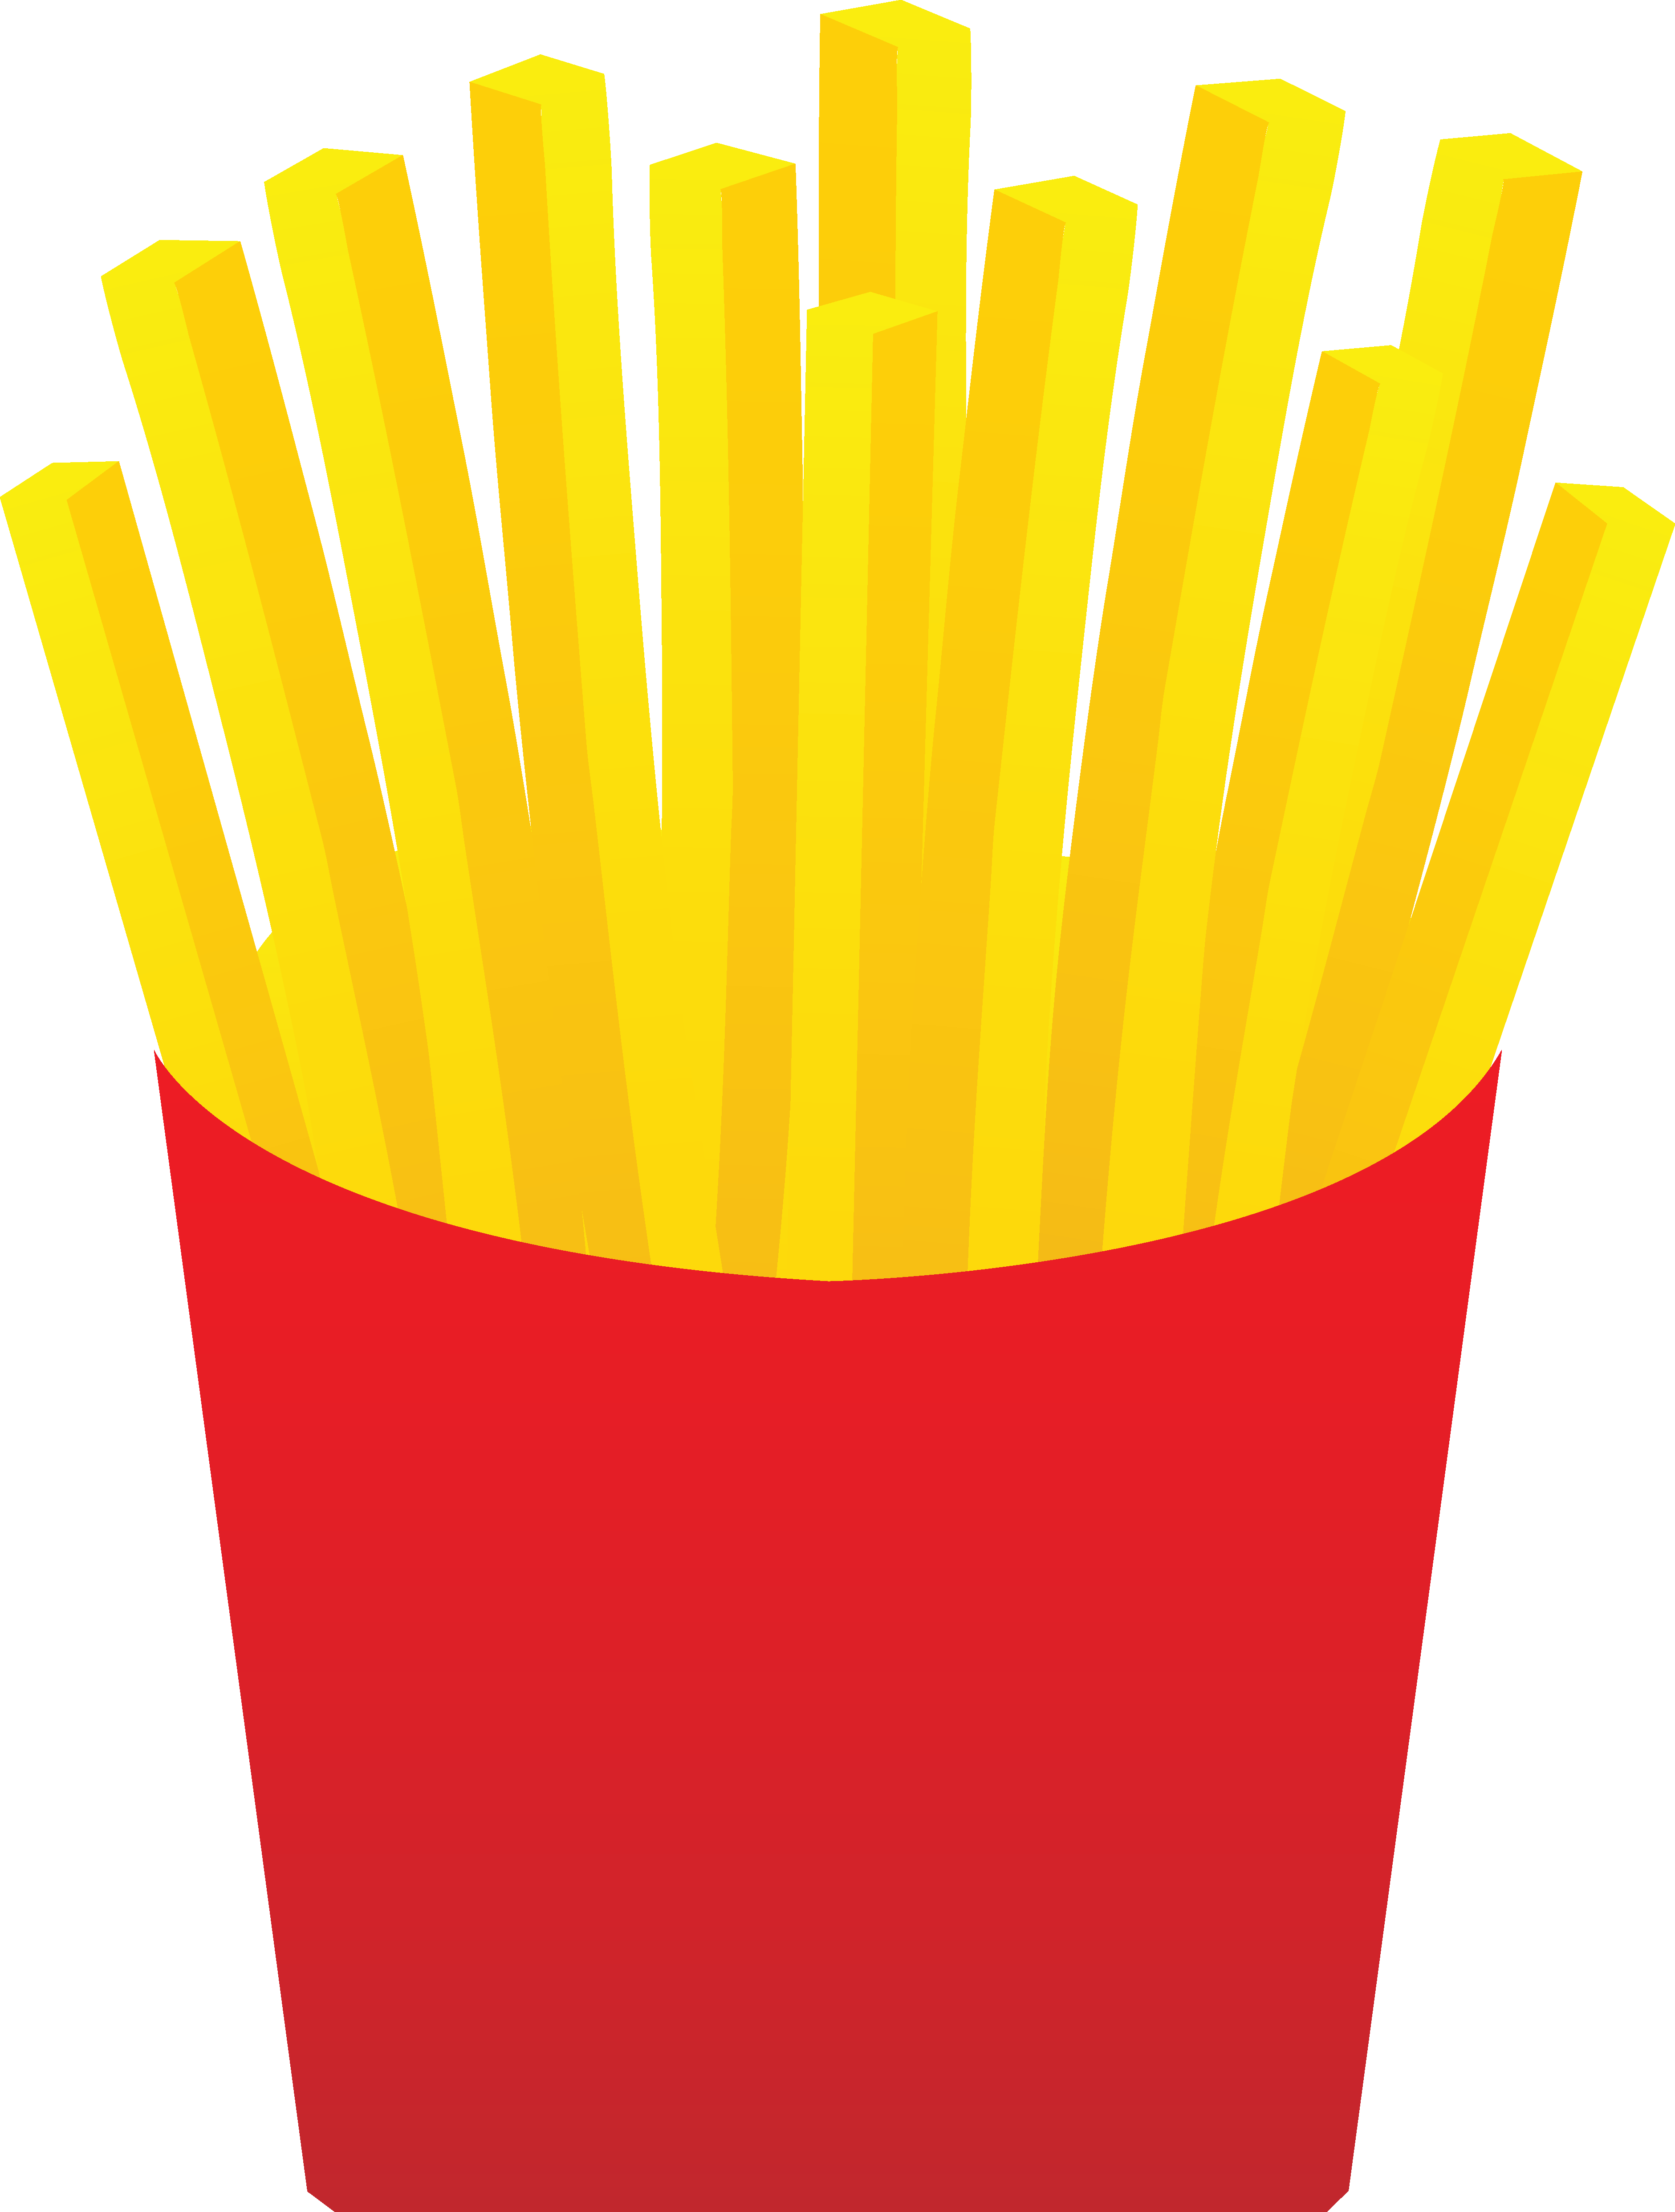 Fries Clip Art - Cliparts.co